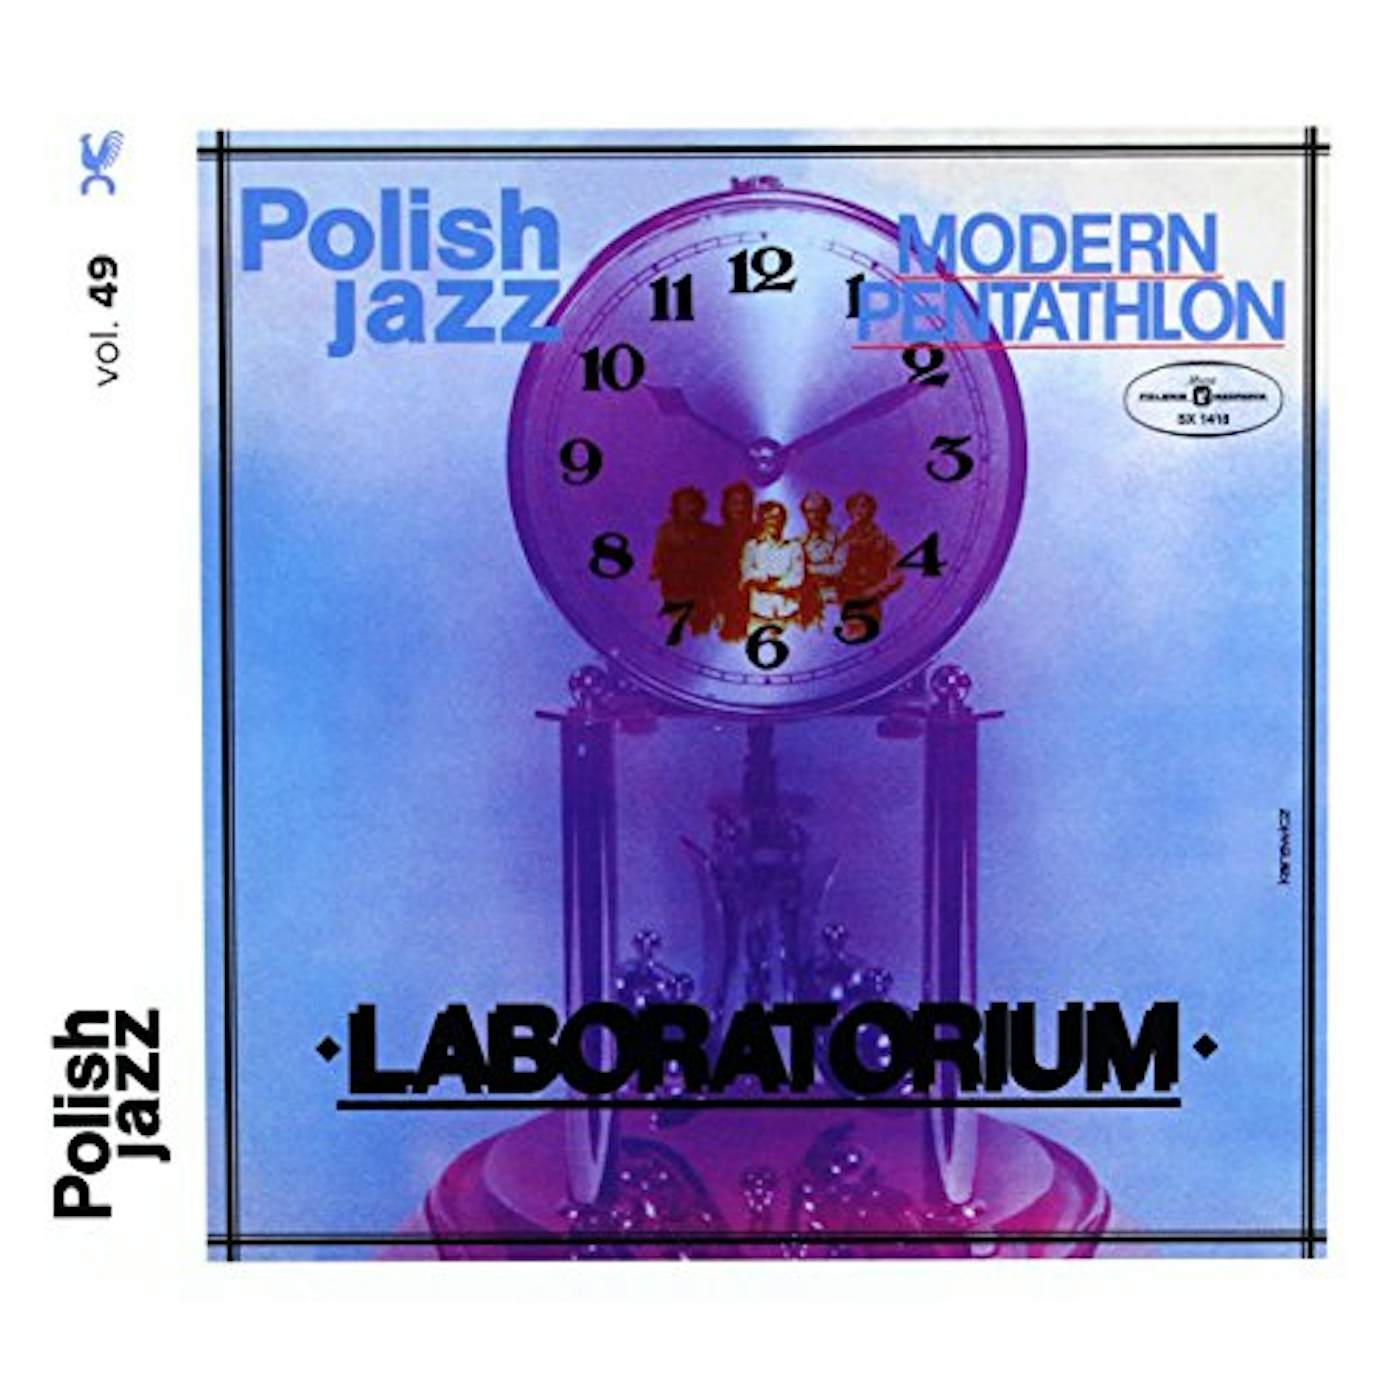 Laboratorium MODERN PENTATHLON (POLISH JAZZ) CD